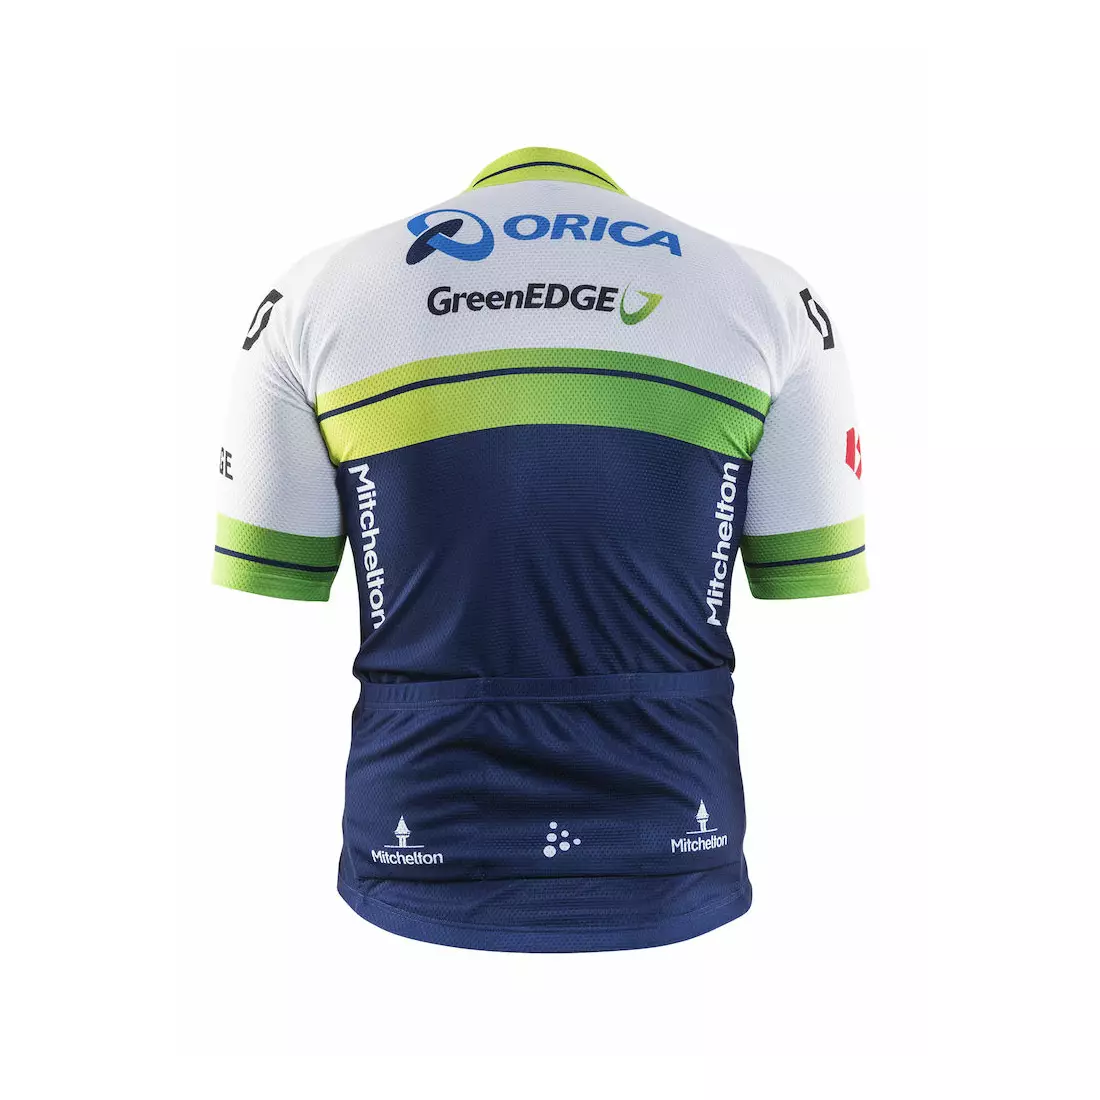 CRAFT ORICA GREEN Edge 2016 cycling jersey 1904465-2900